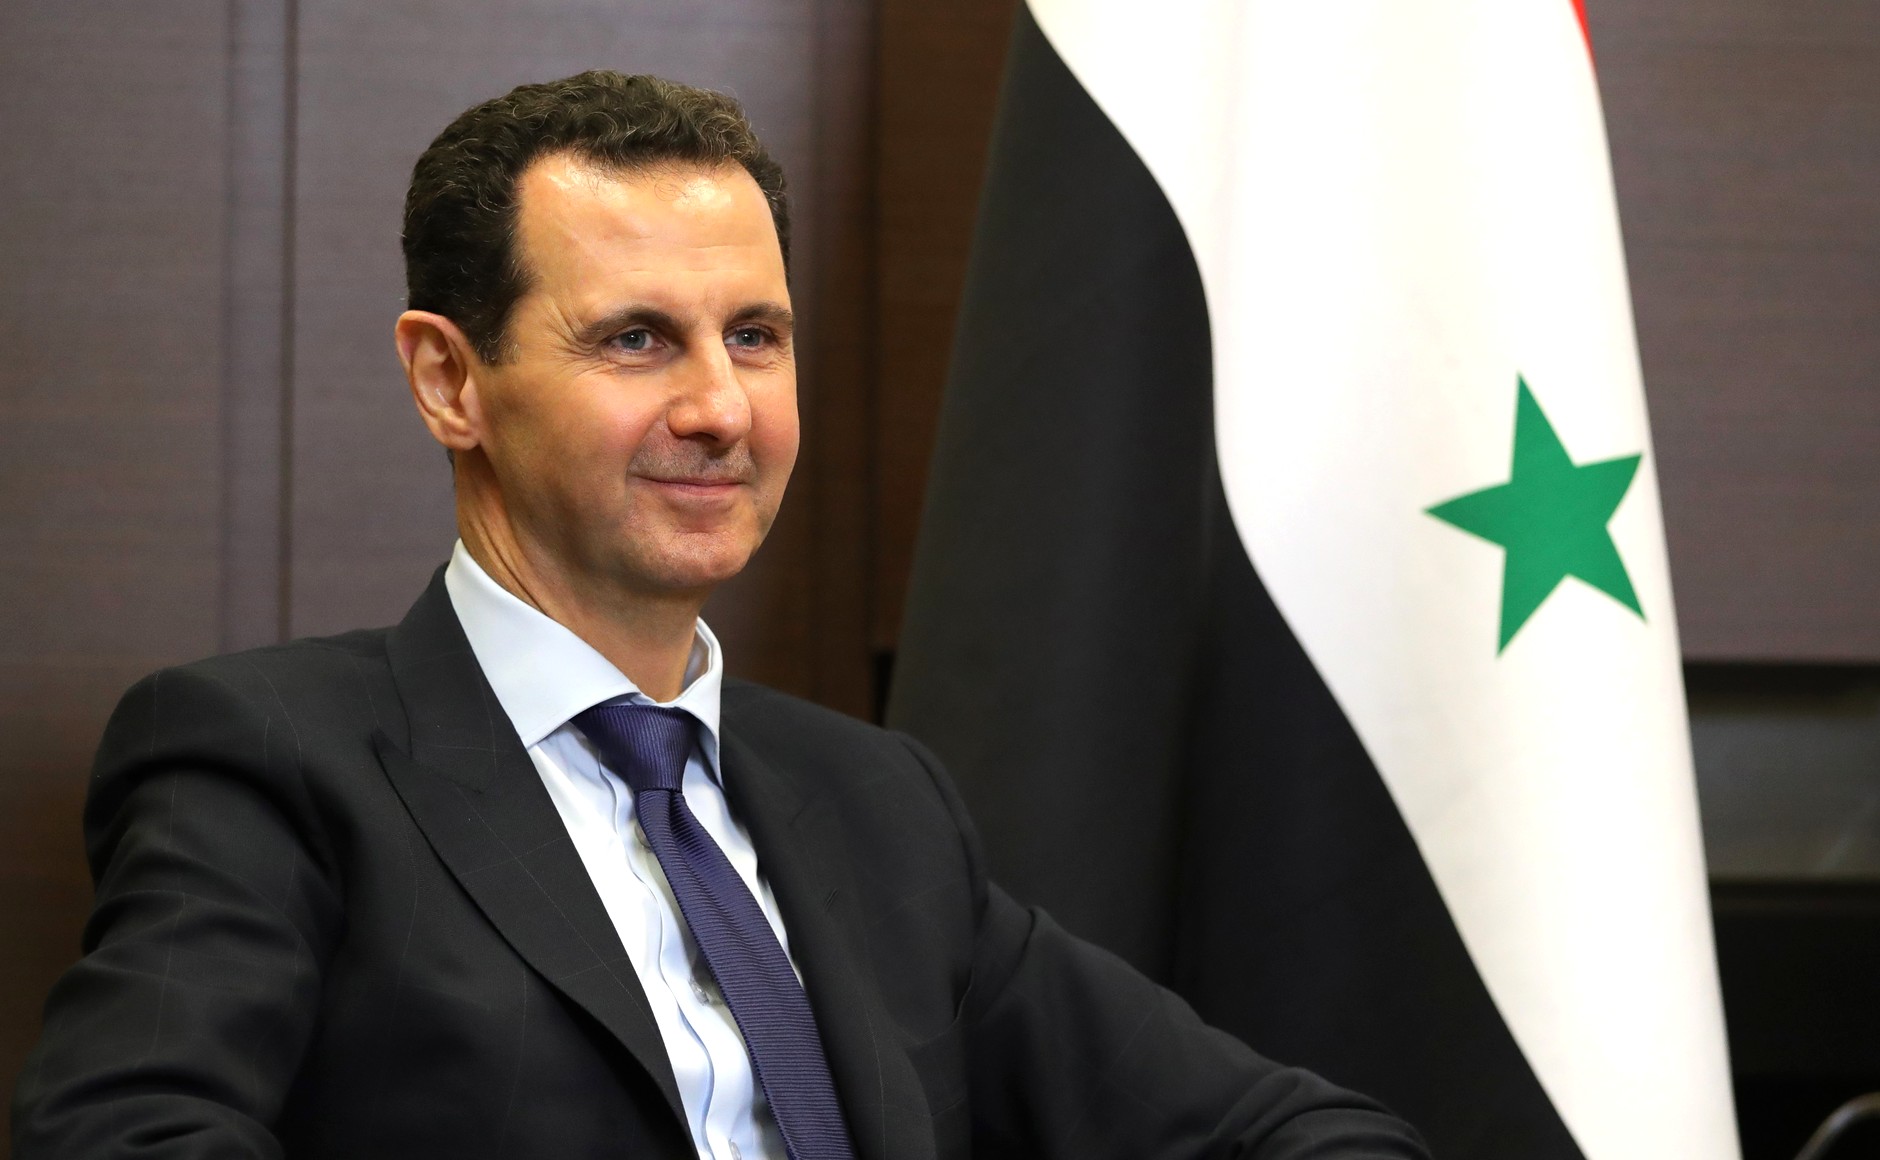 Syrian Dictator Bashar al-Assad Calls Trump ‘The Best American President’: ‘A Transparent Foe’